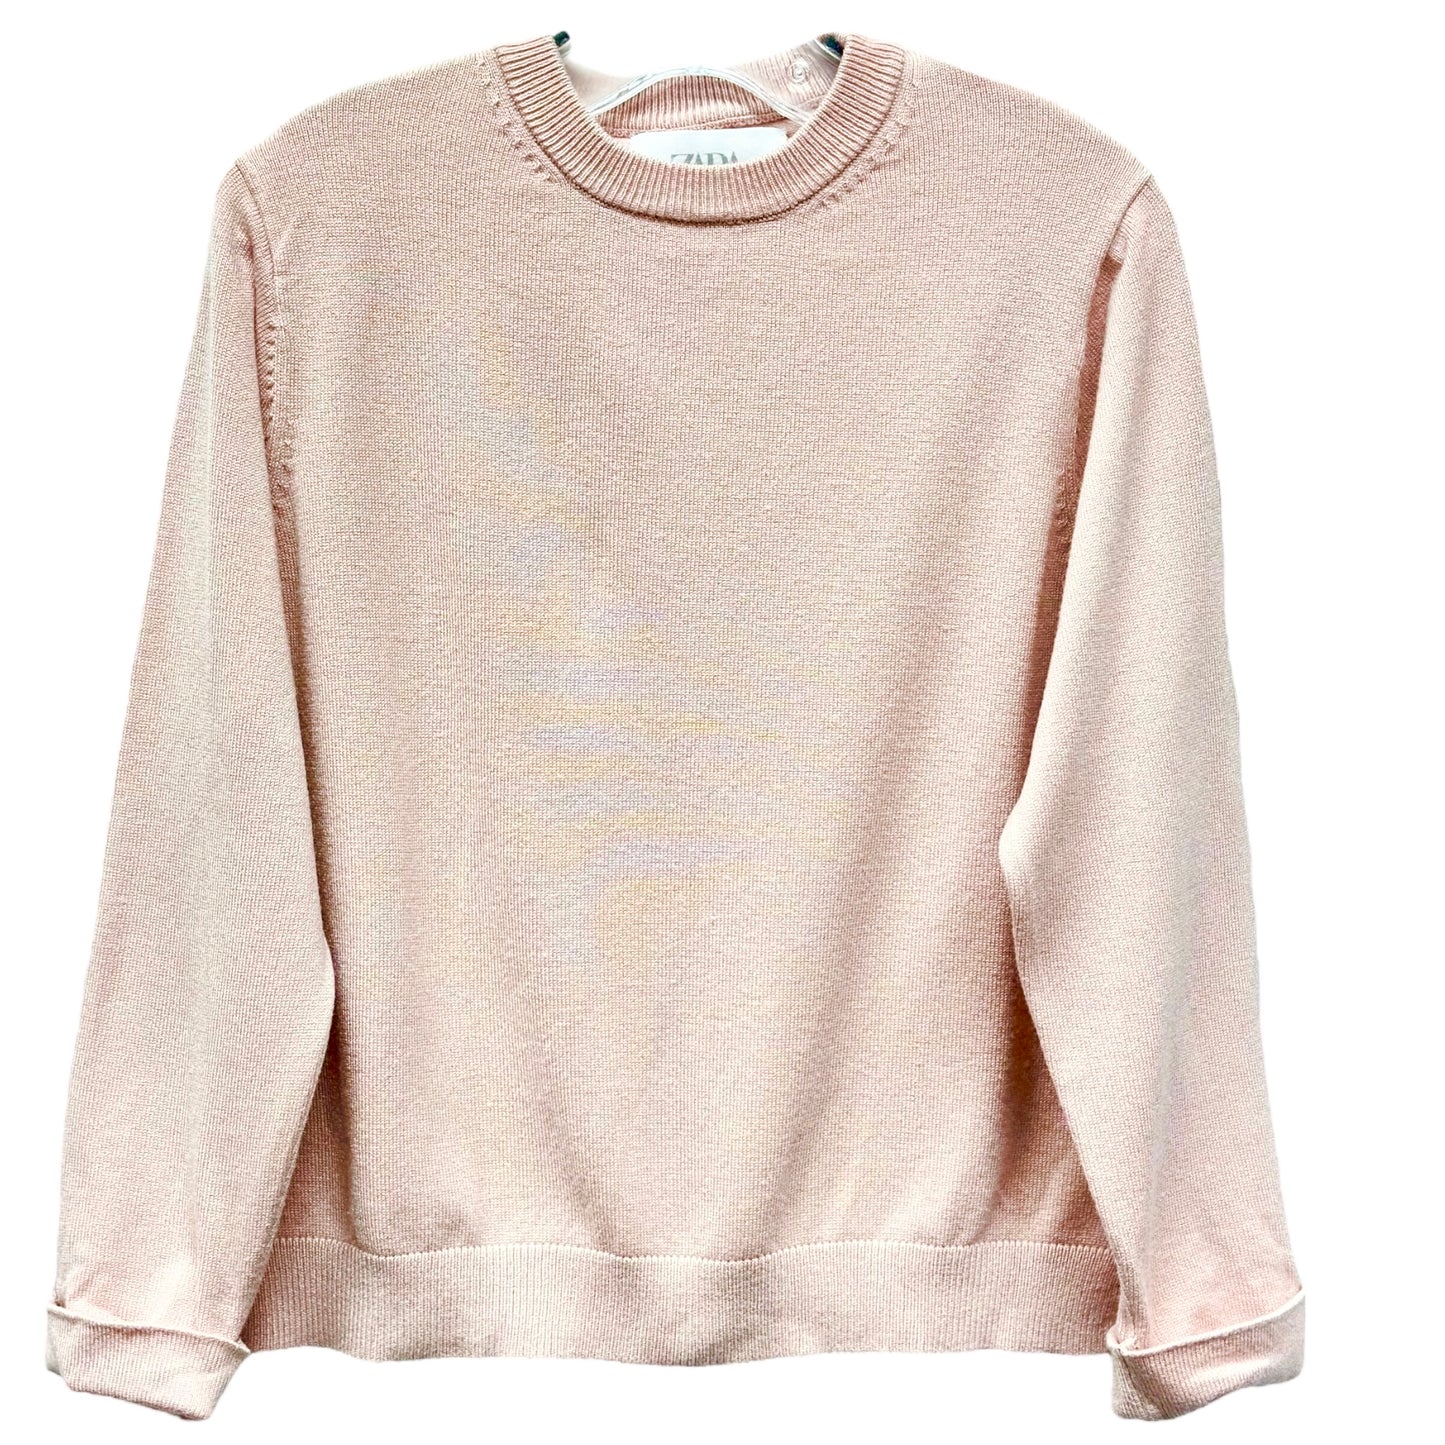 Zara 6 Sweater